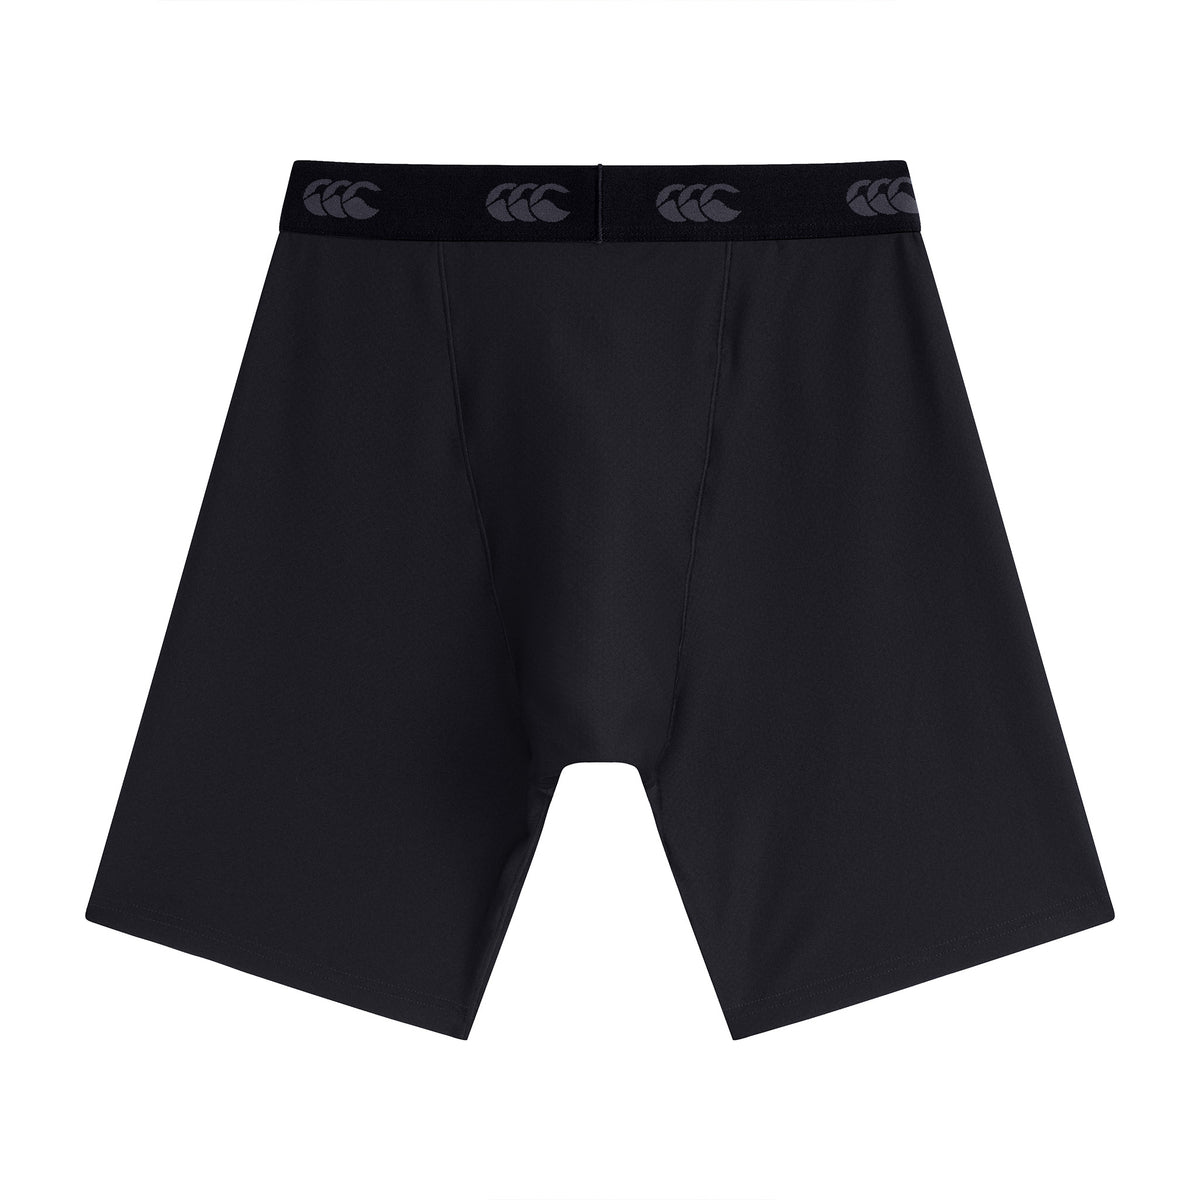 Canterbury Mens 8 inch Thermoreg Shorts: Black